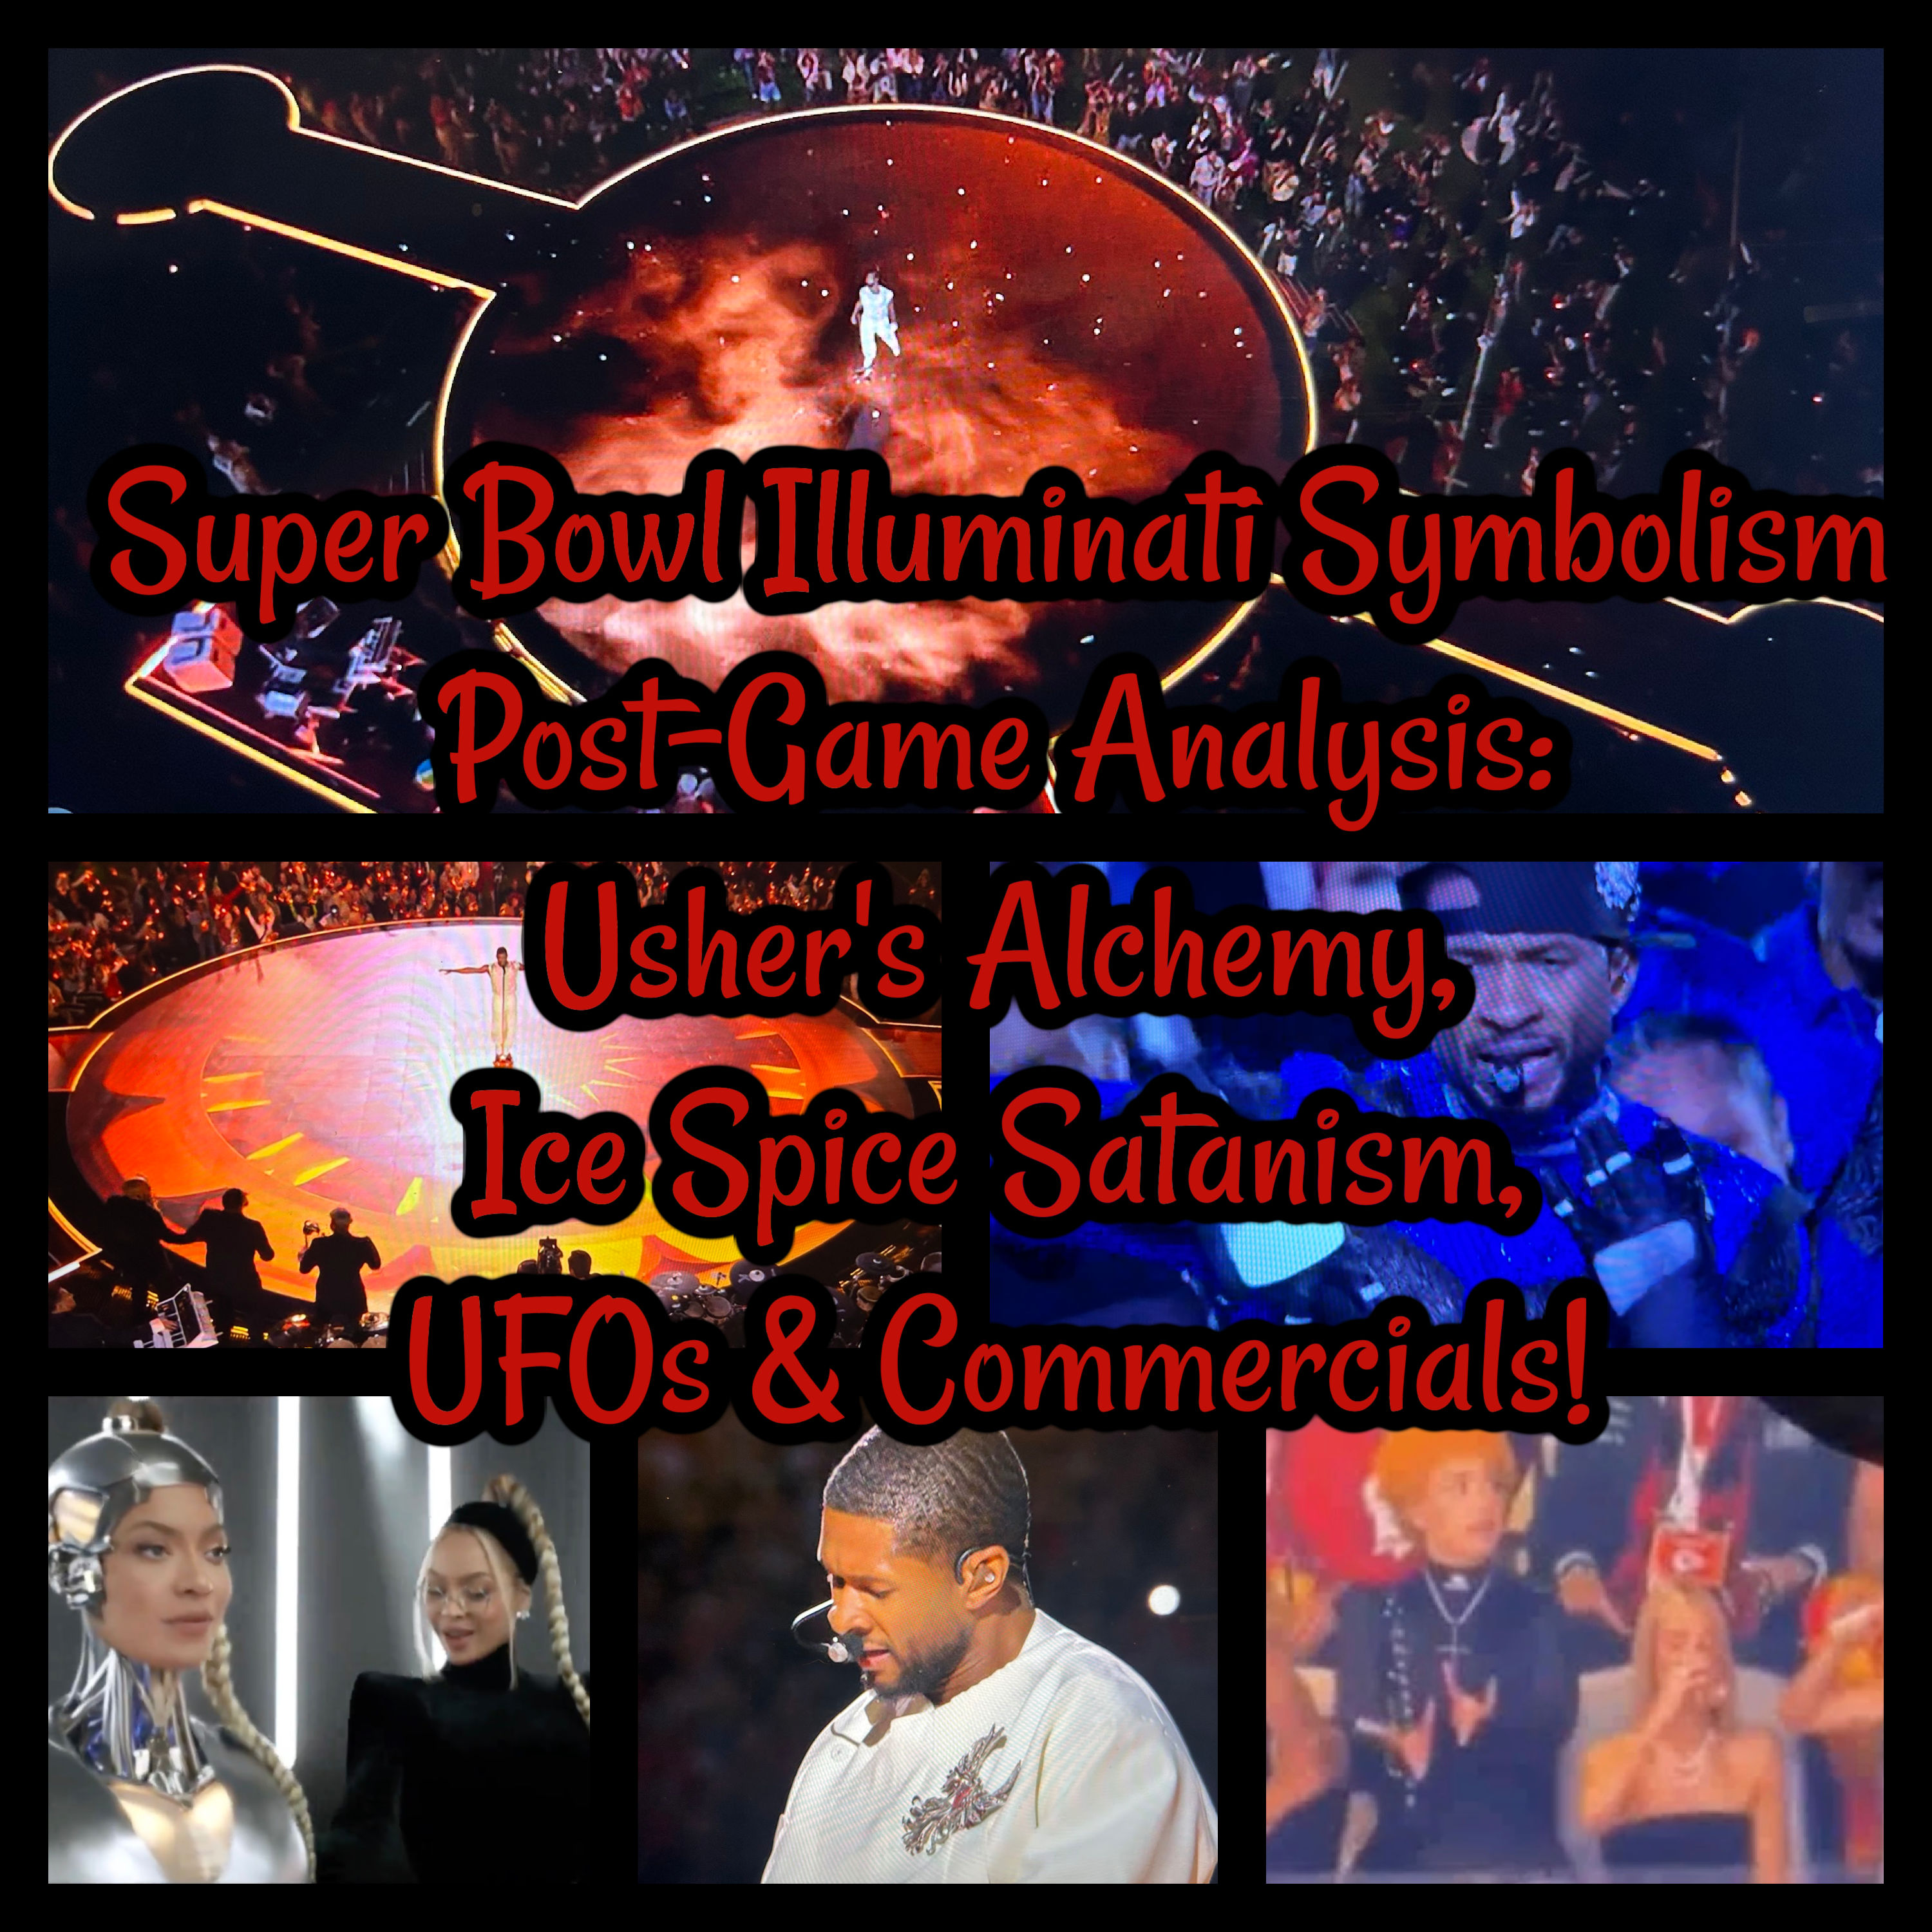 Super Bowl Illuminati Symbolism Post-Game: Usher's Alchemy, Saturn, Ice Spice Satanism, UFOs & Commercials!